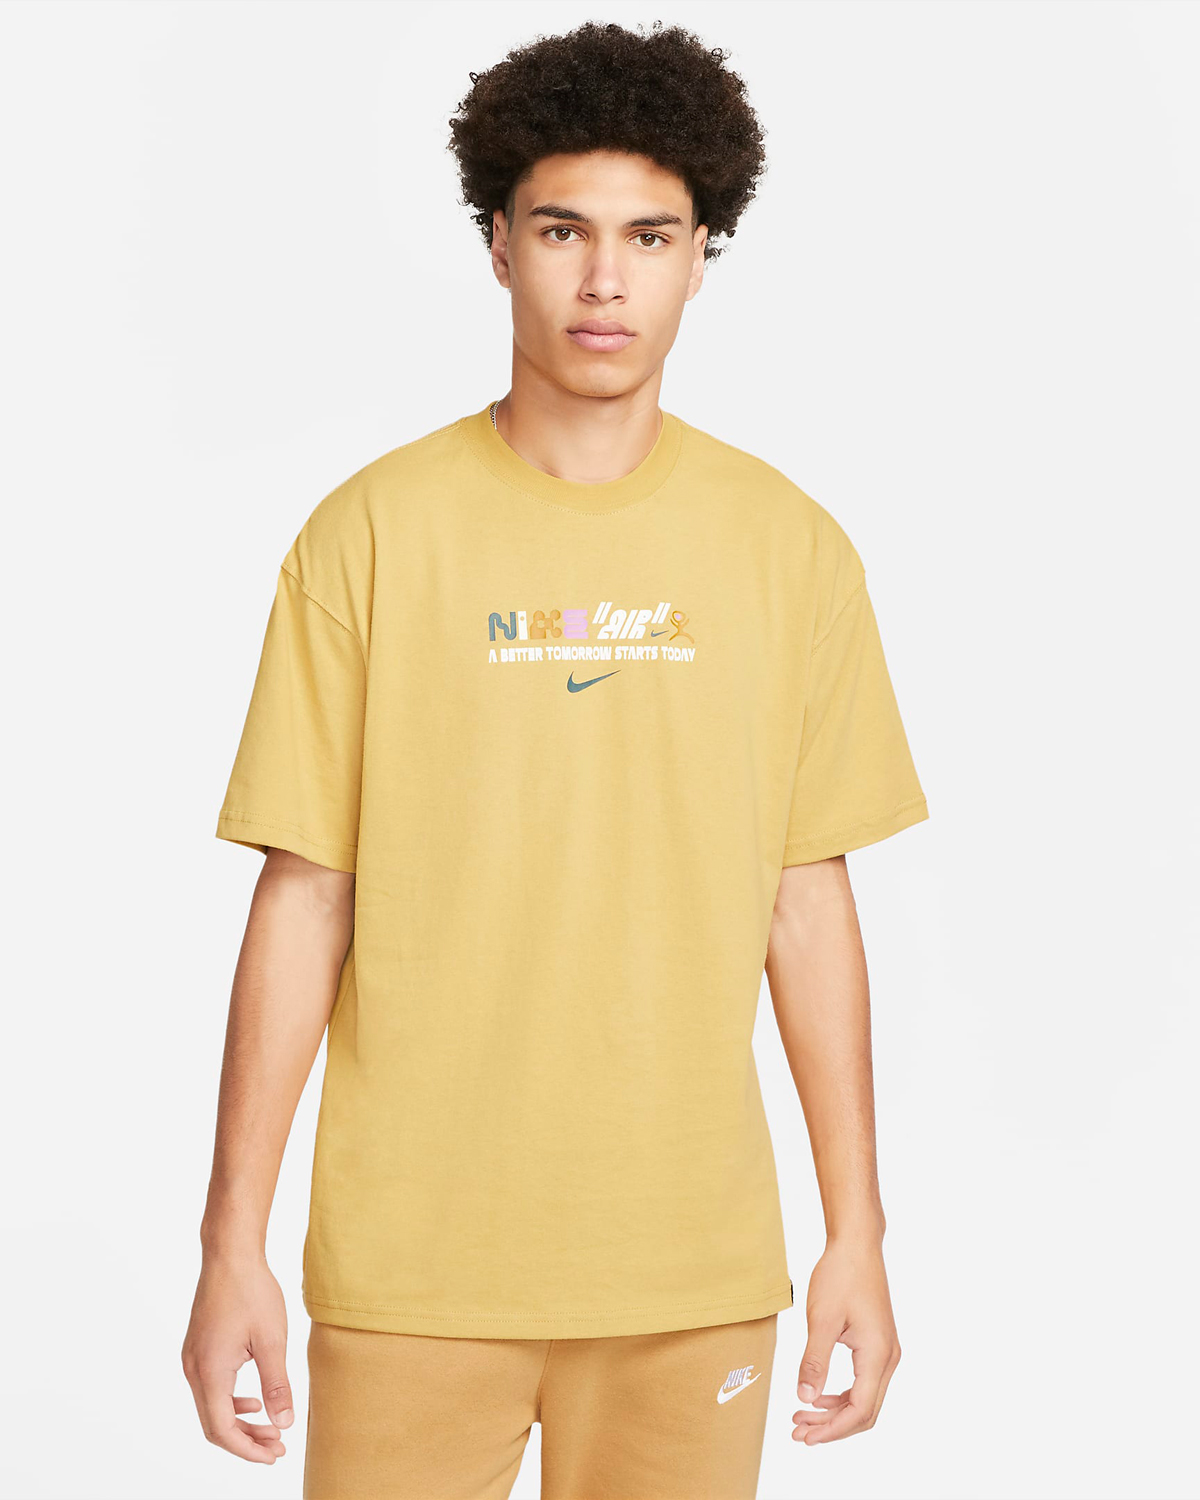 Nike-Sportswear-Graphc-T-Shirt-Wheat-Gold-1